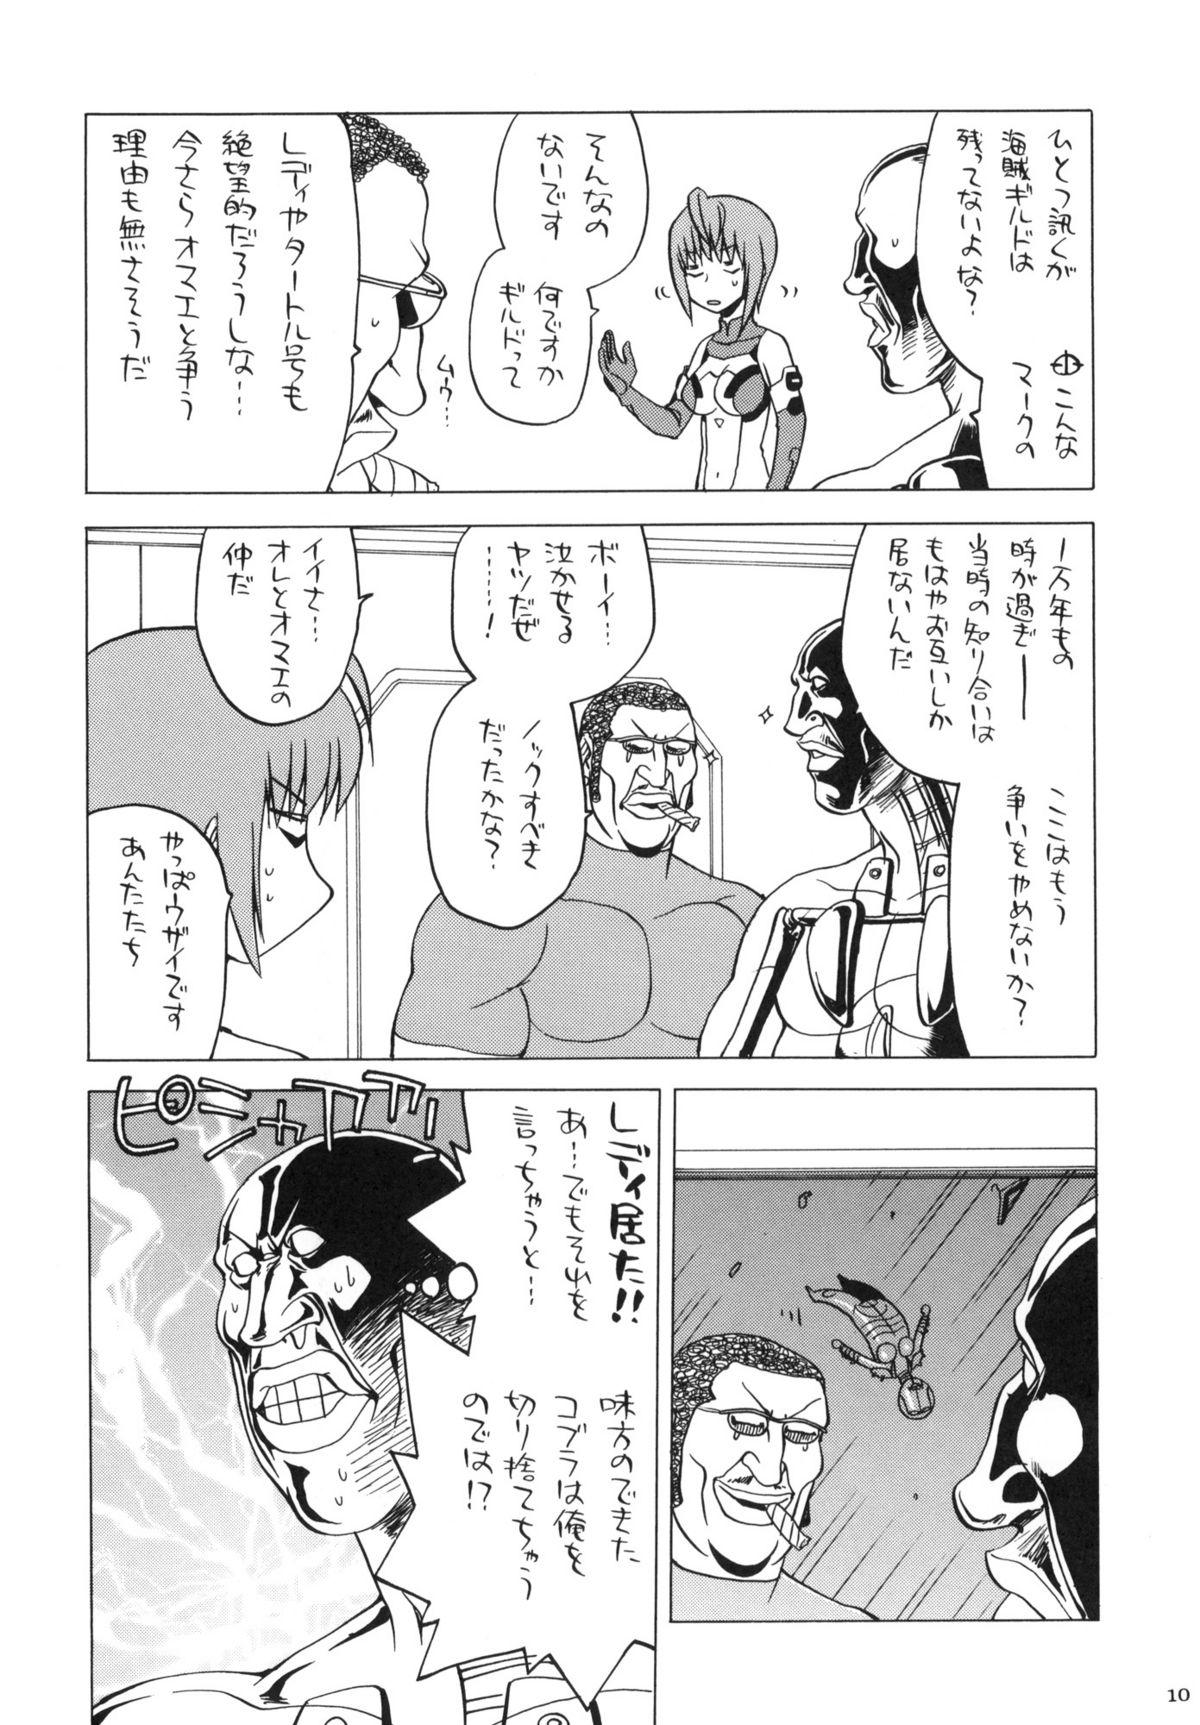 Ikillitts Mythril Dinner - Sora wo kakeru shoujo Boss - Page 9